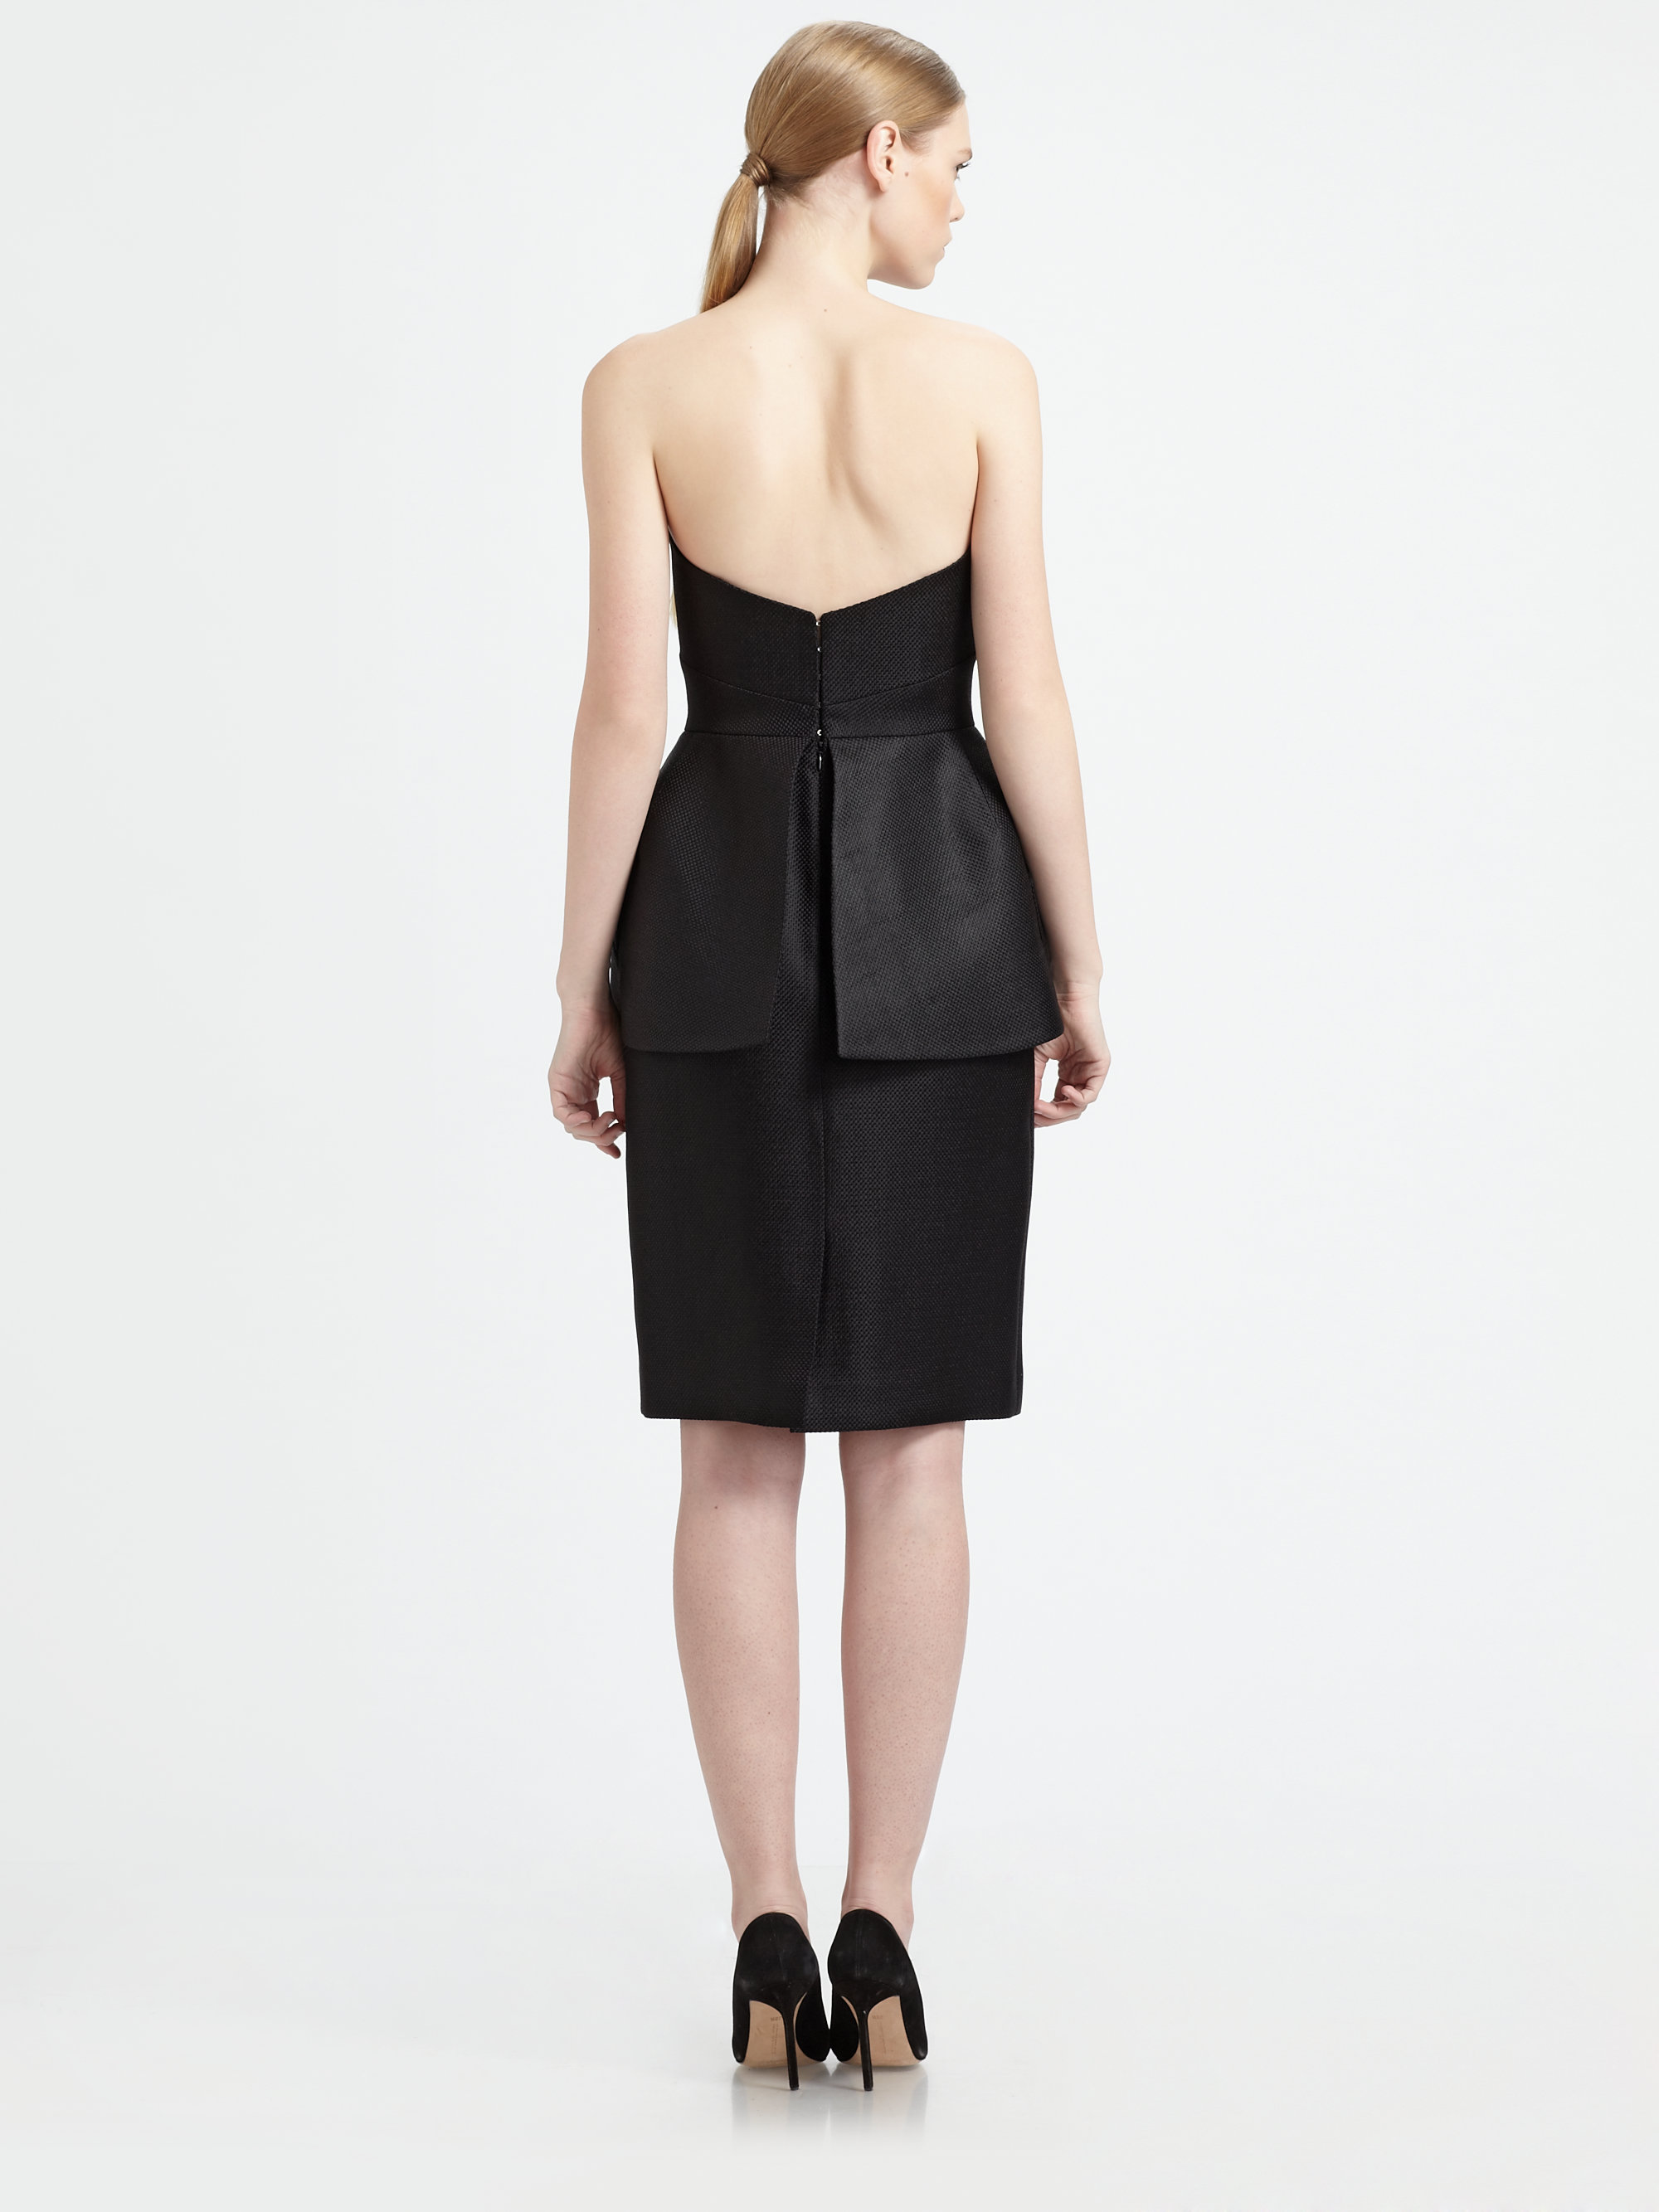 Lyst - Martin Grant Strapless Peplum Dress in Black